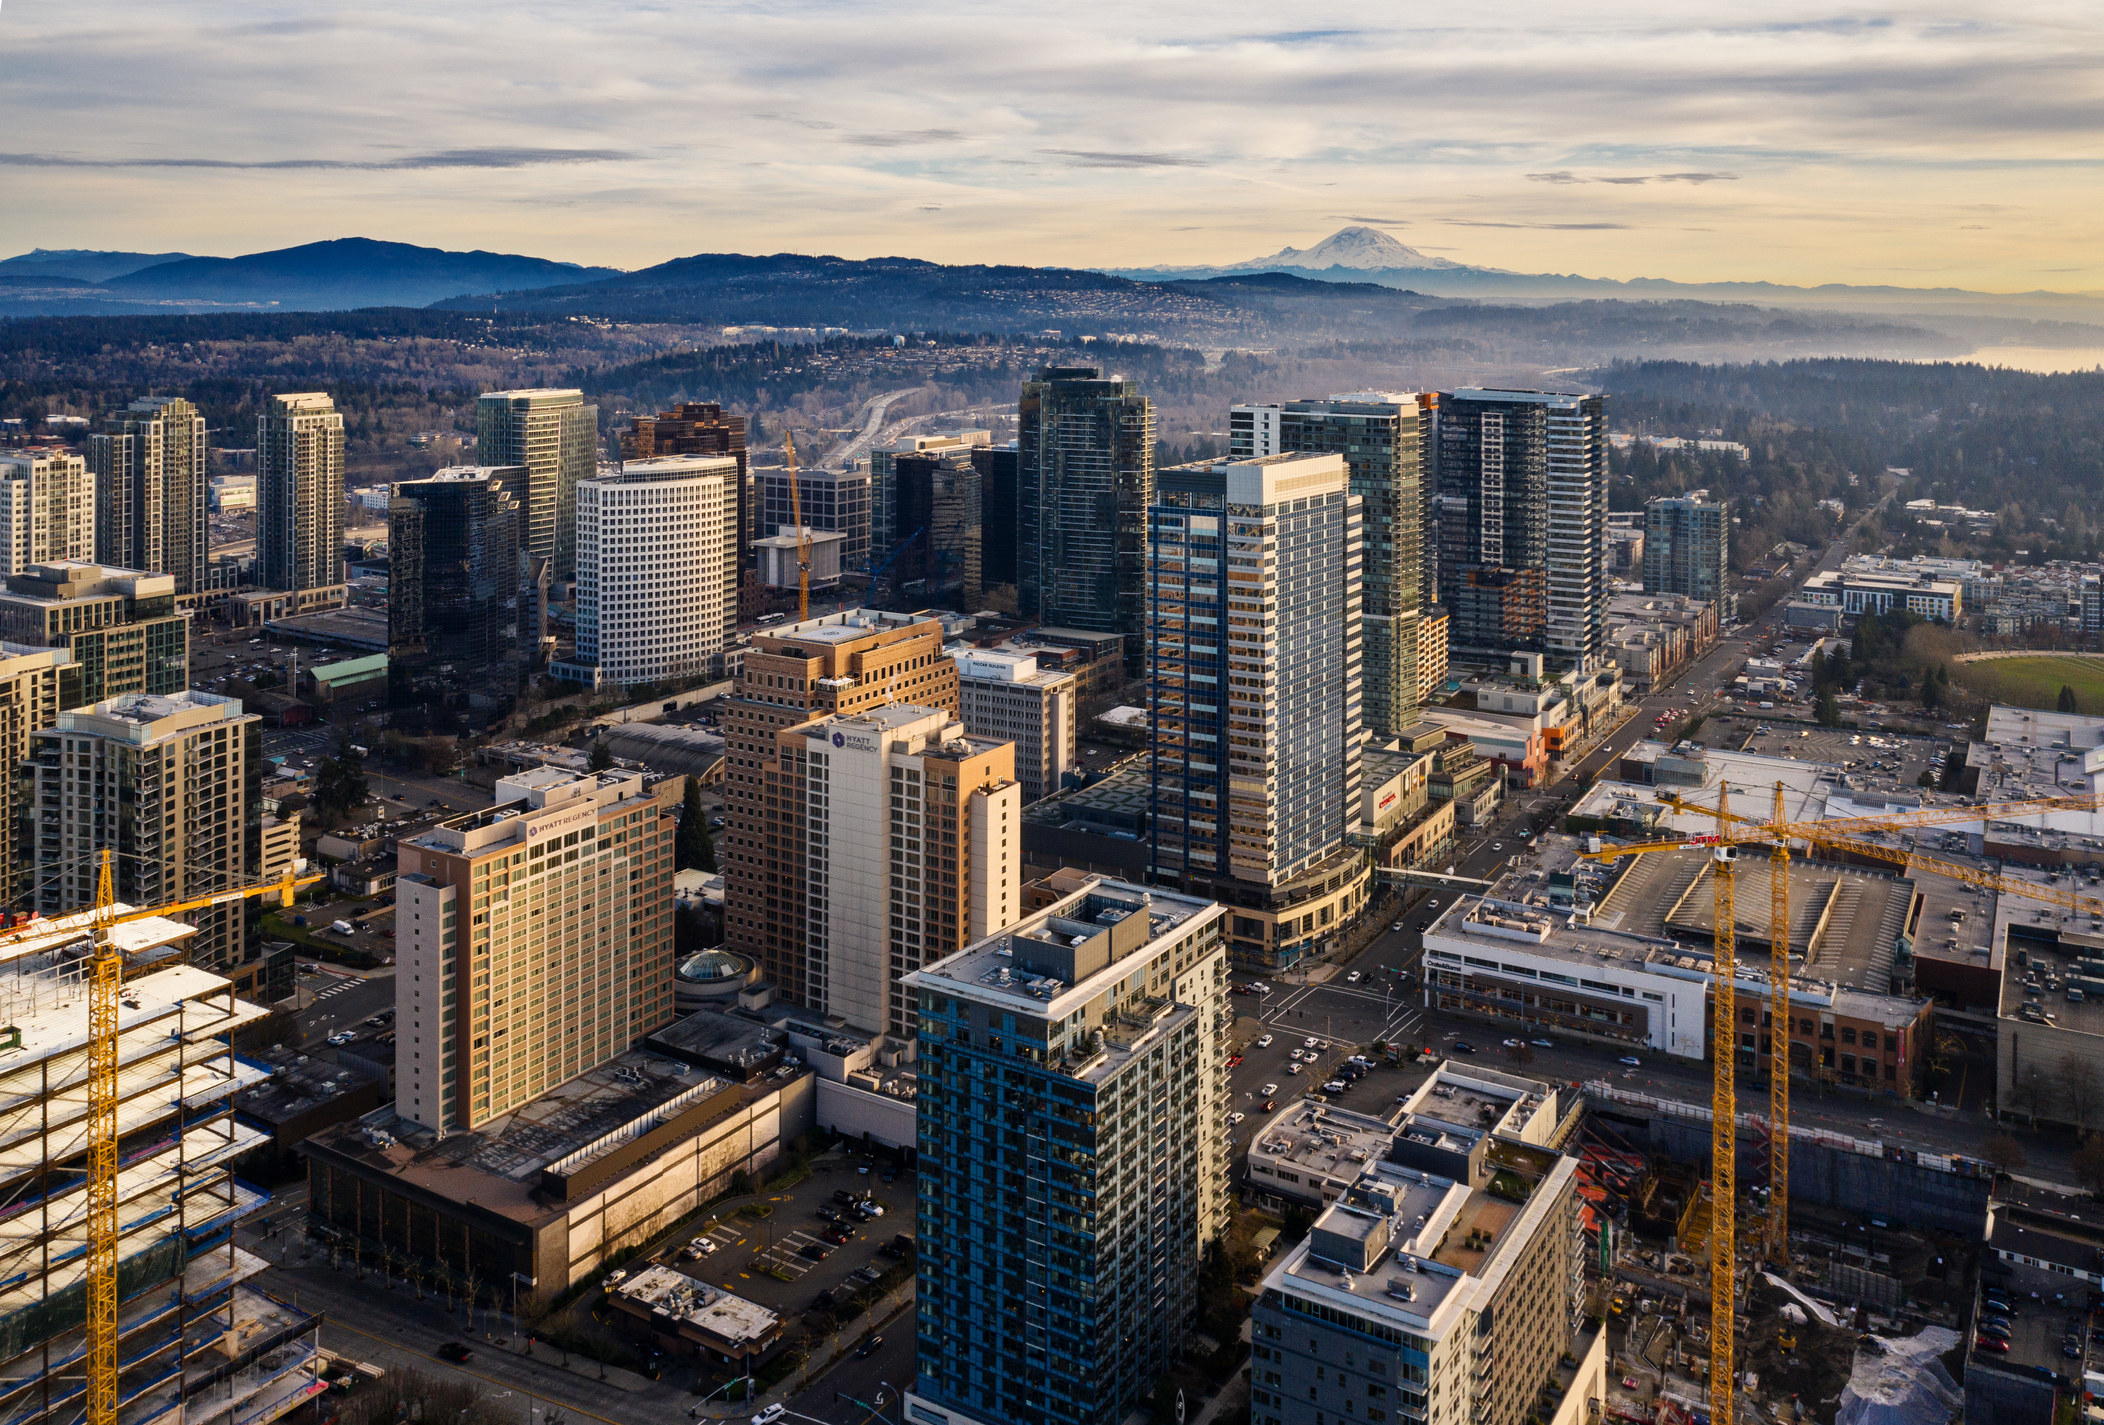 Aerial view of skyscrapers in downtown Bellevue